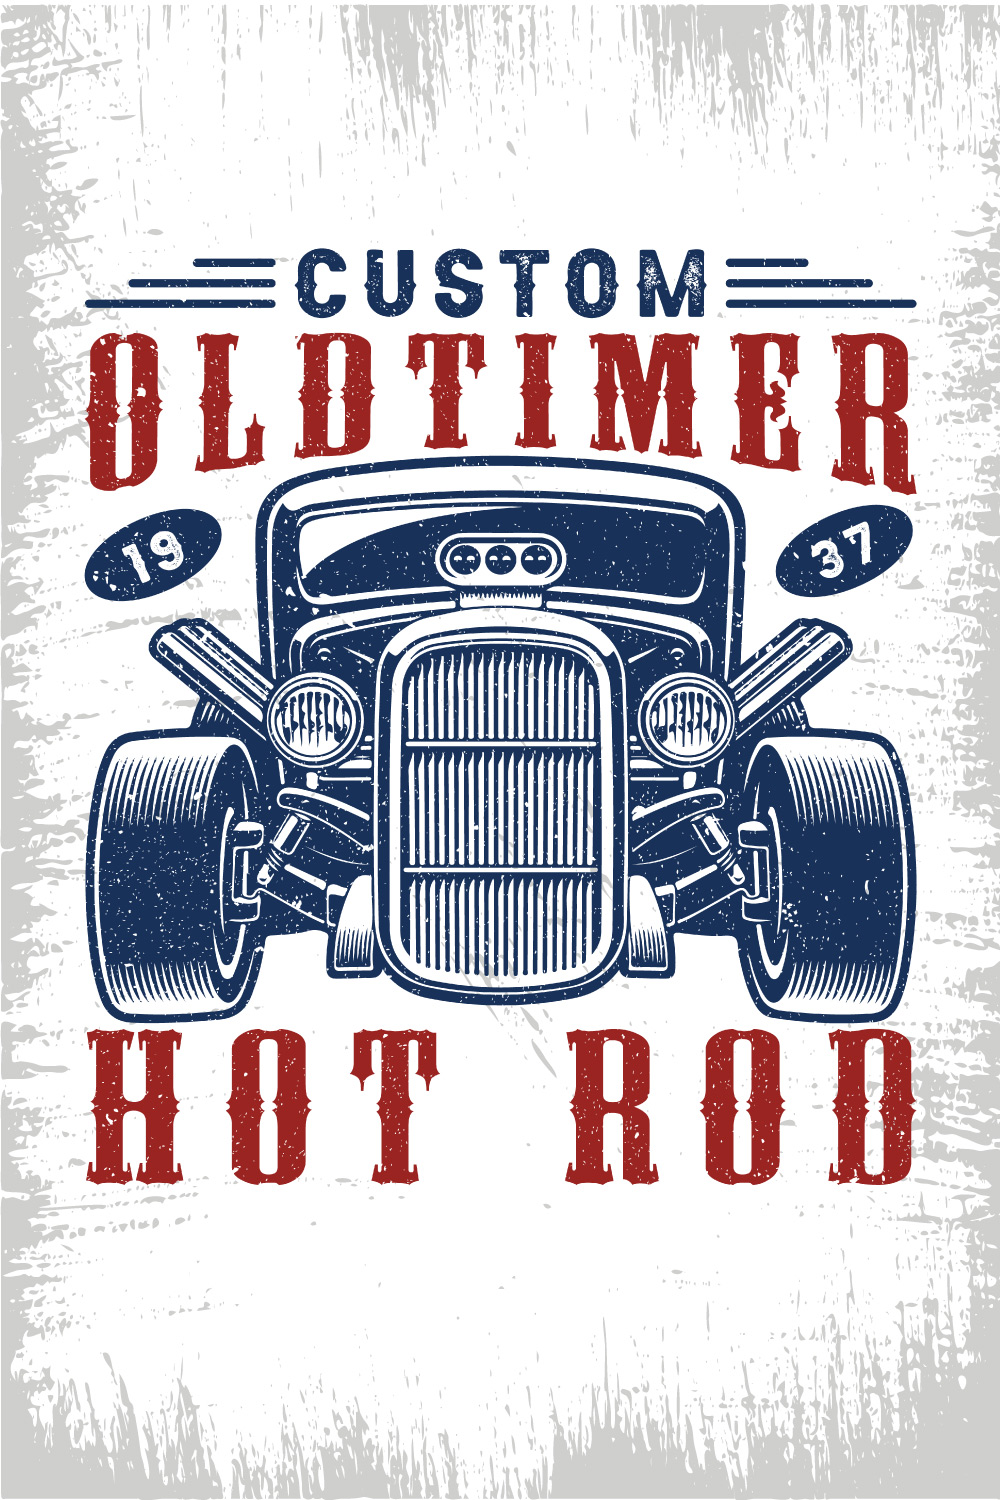 Custom oldtimer 1937 hotrod - hot rod t shirt design vector pinterest preview image.